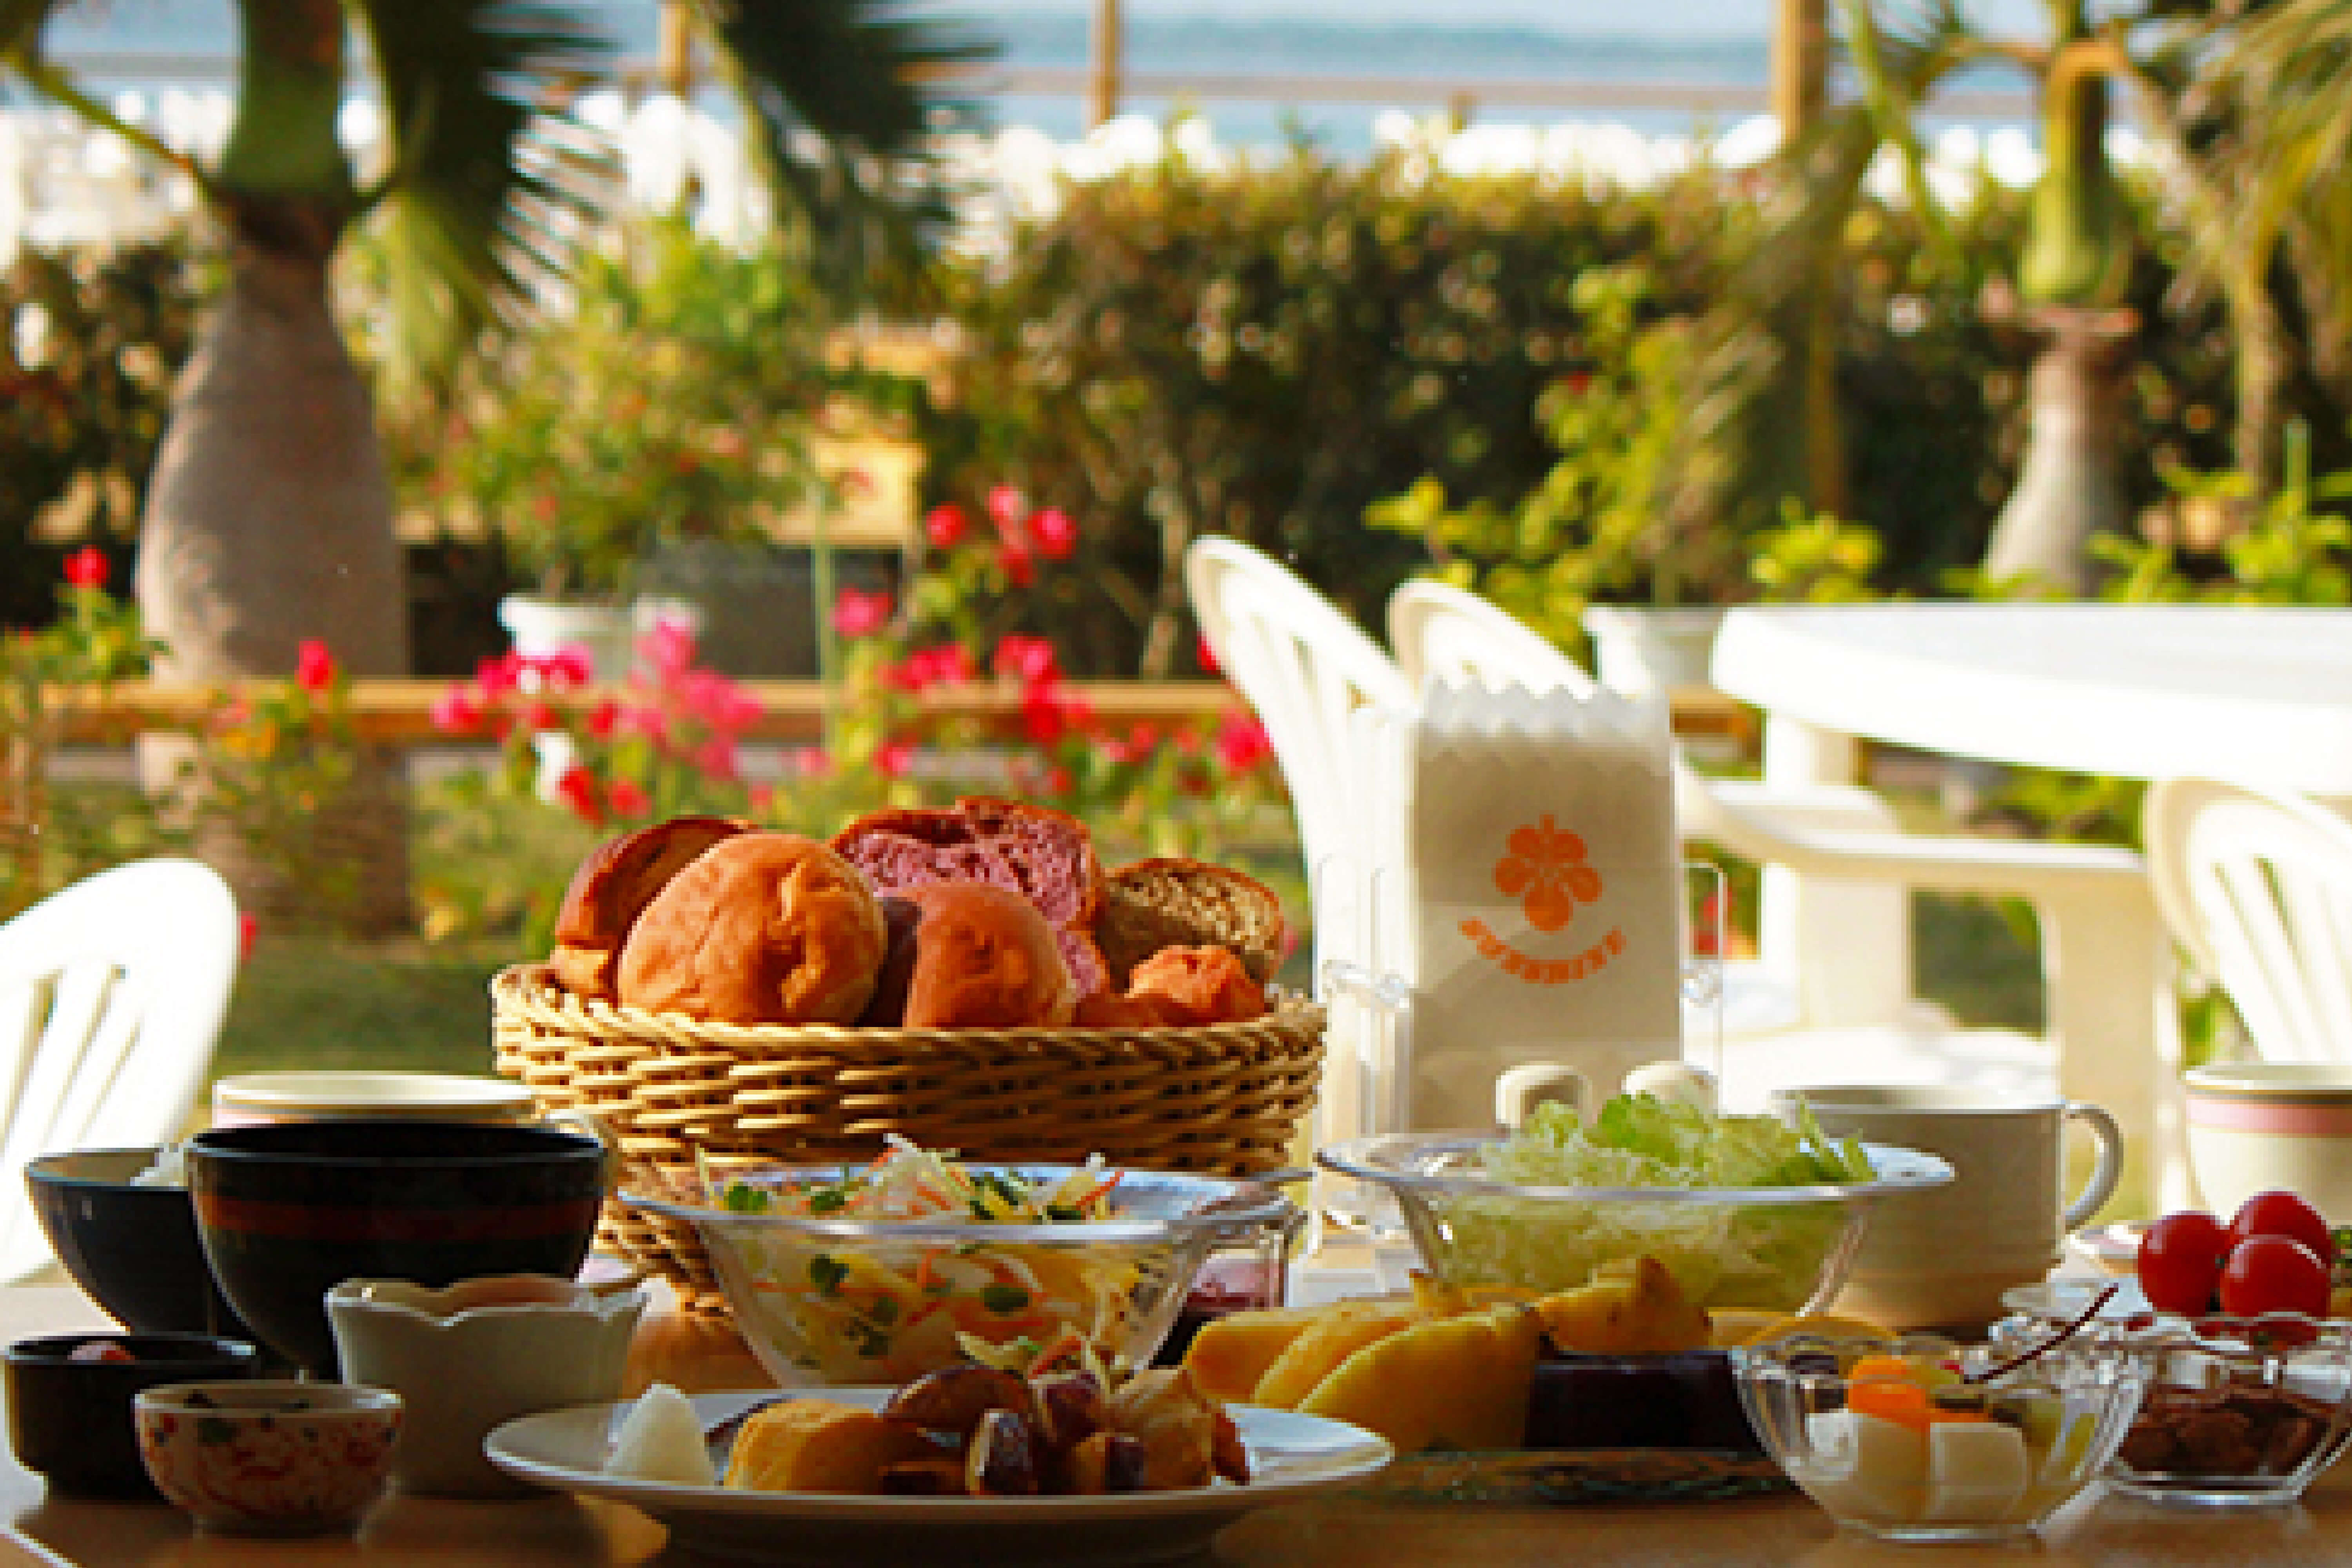 Breakfast offers buffet style Okinawan, Japanese and Western delights.